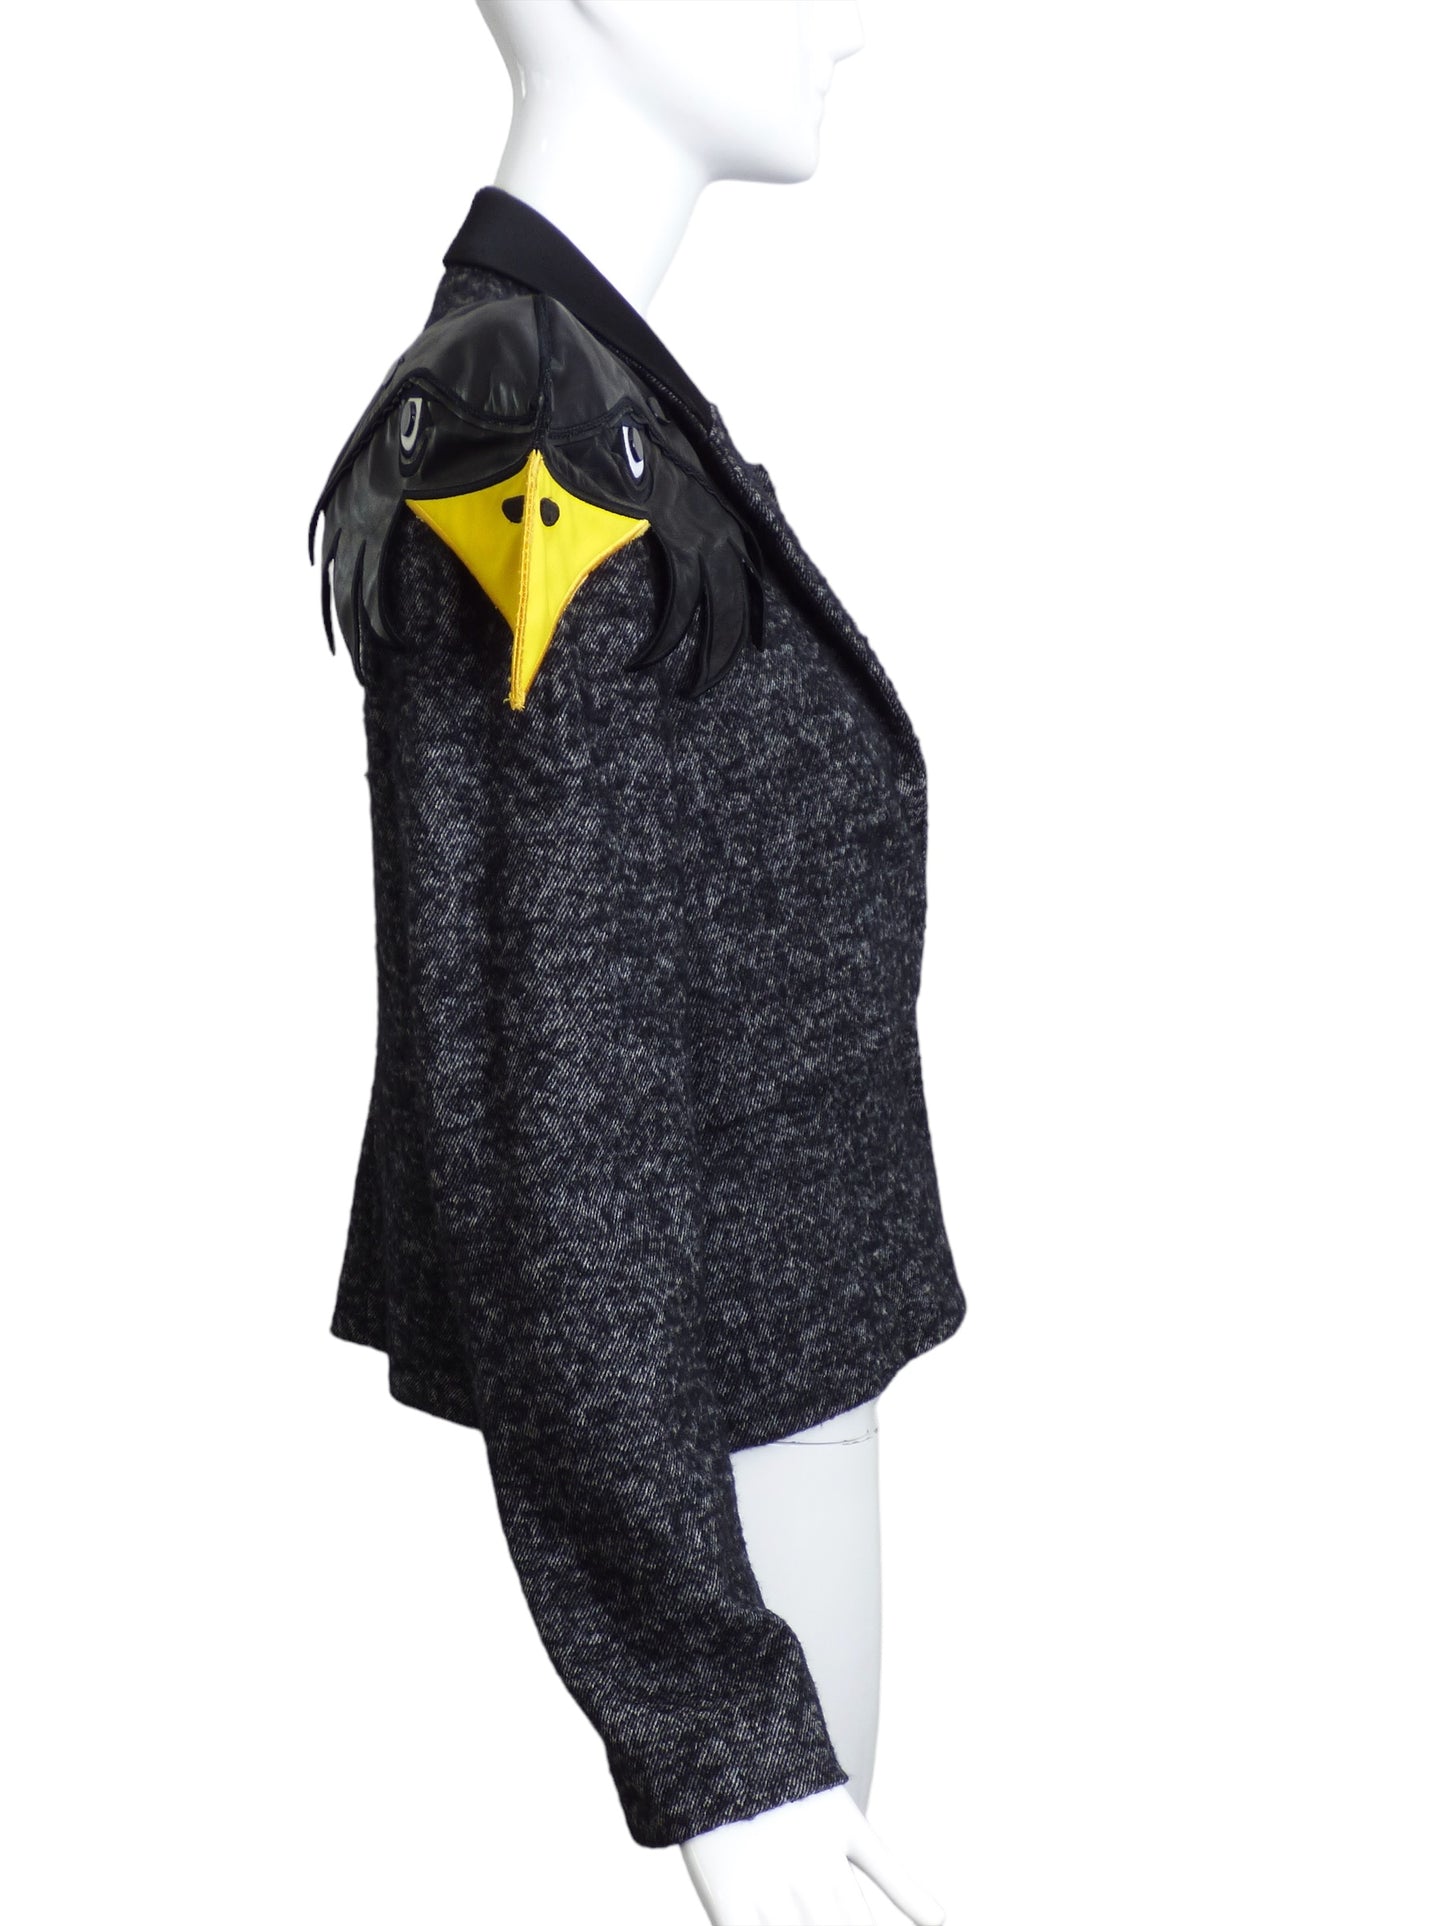 JC de CASTELBAJAC- NWT Black Wool Raven Jacket, Size 6